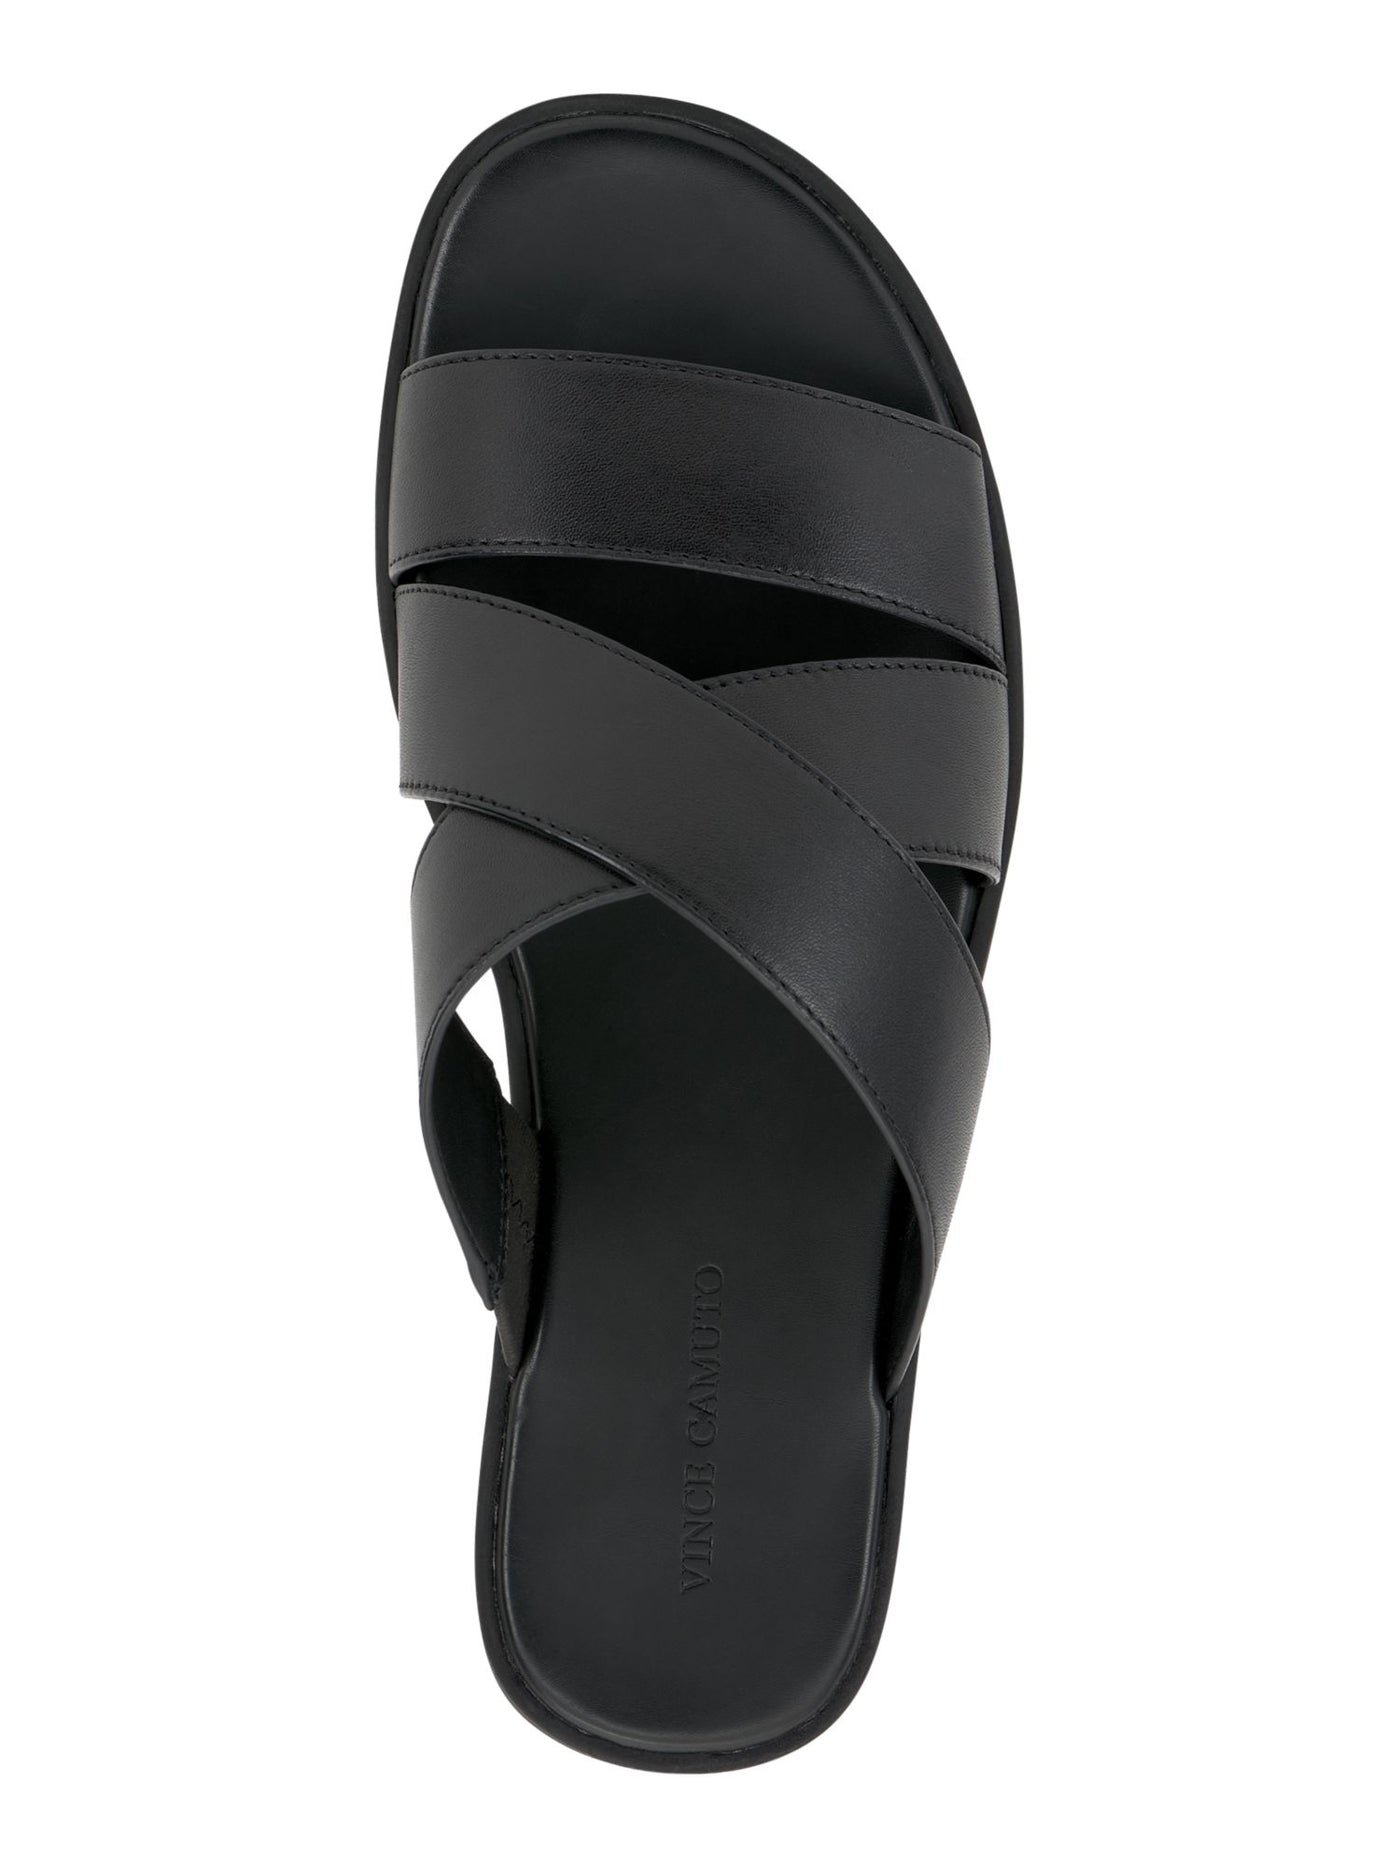 VINCE CAMUTO Mens Black Crisscross Upper Straps Goring Padded Waely Open Toe Slip On Leather Slide Sandals Shoes 9 M